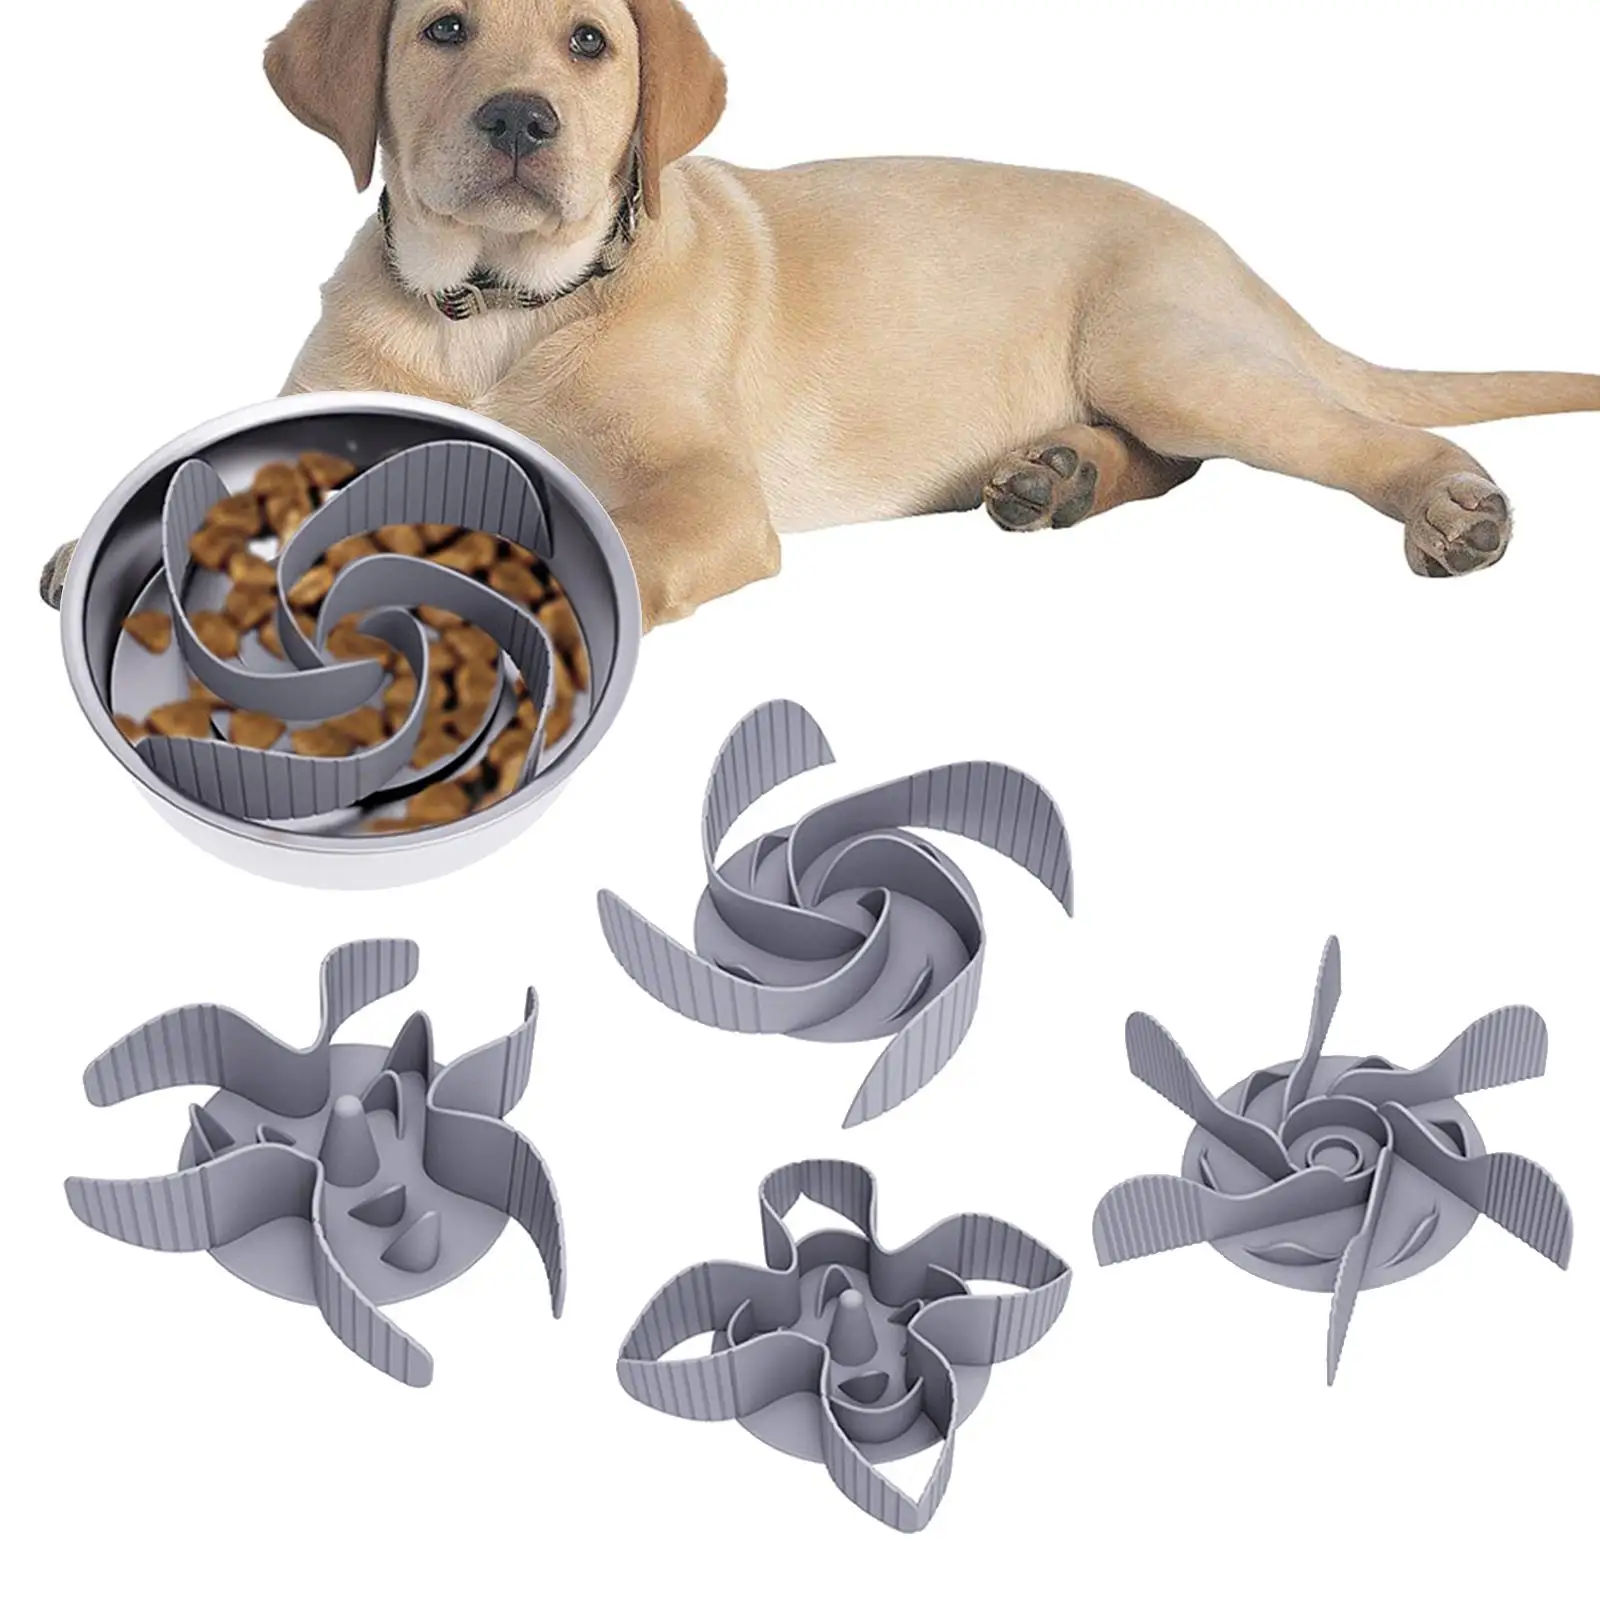 Slow Feeder Dog Bowl Spiral Slow Anti Choke Feeder Insert Silicone Can be Cut Pet feeder Mat